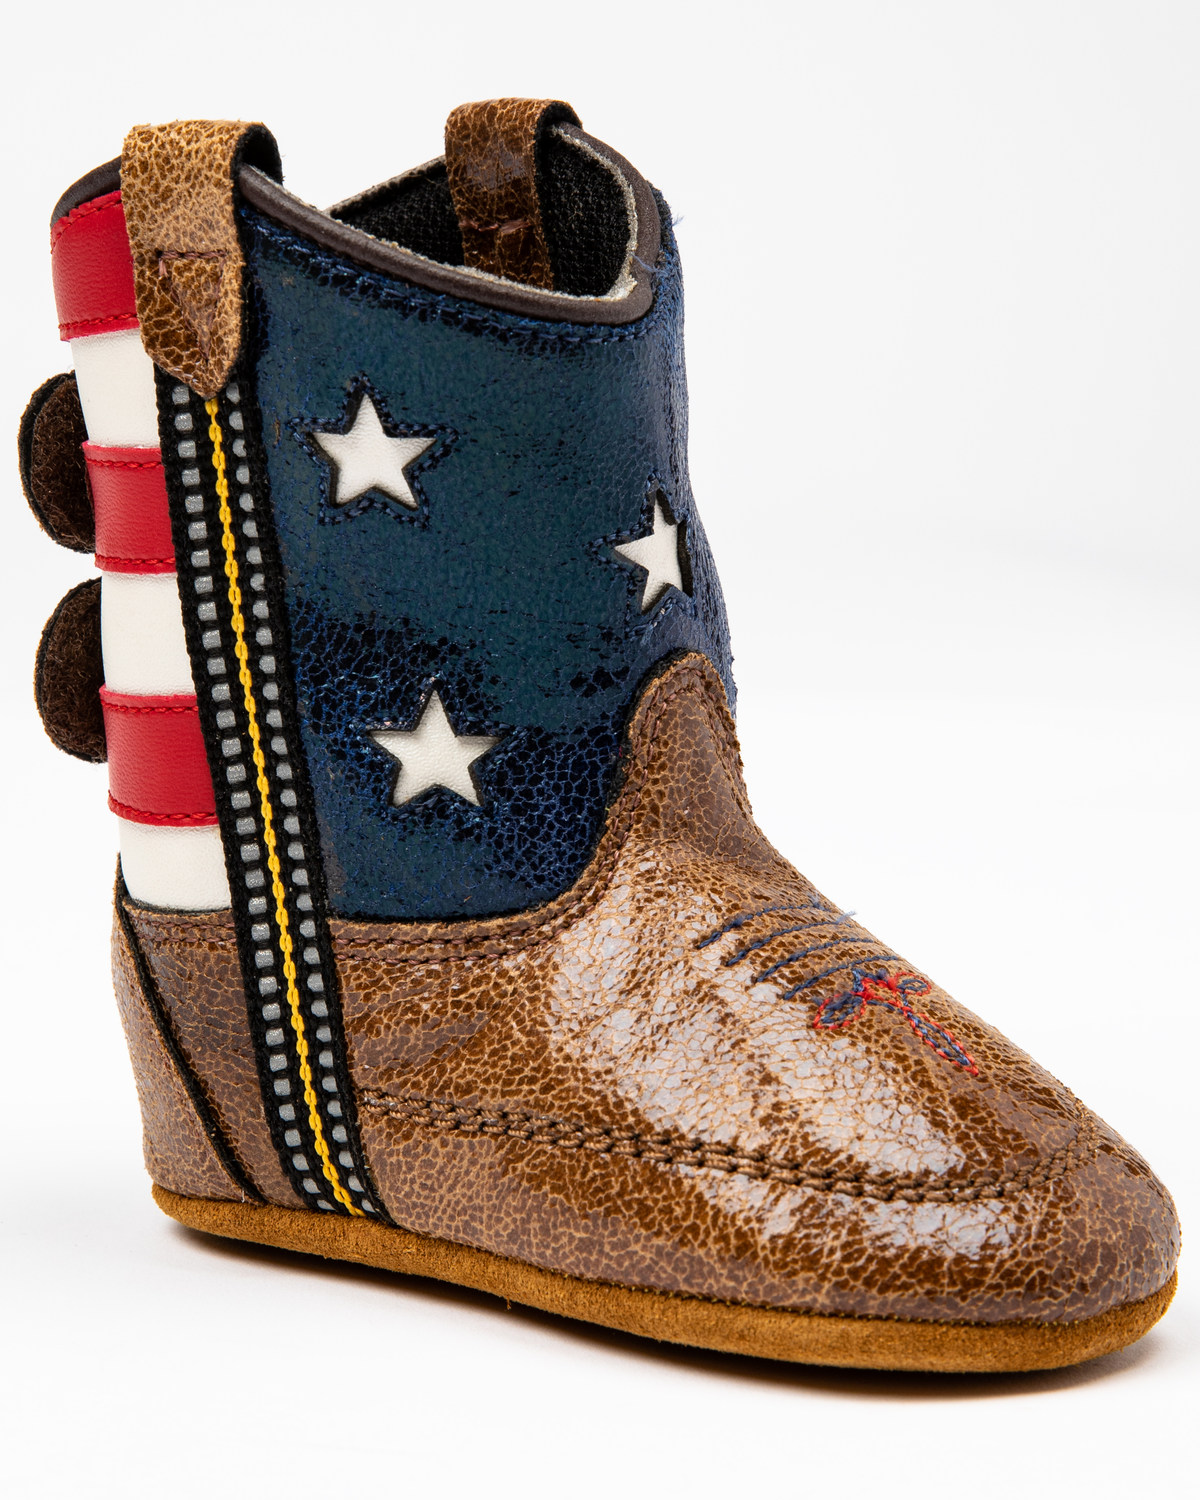 Cody James Infant Boys' Flag Poppet Western Boots - Round Toe